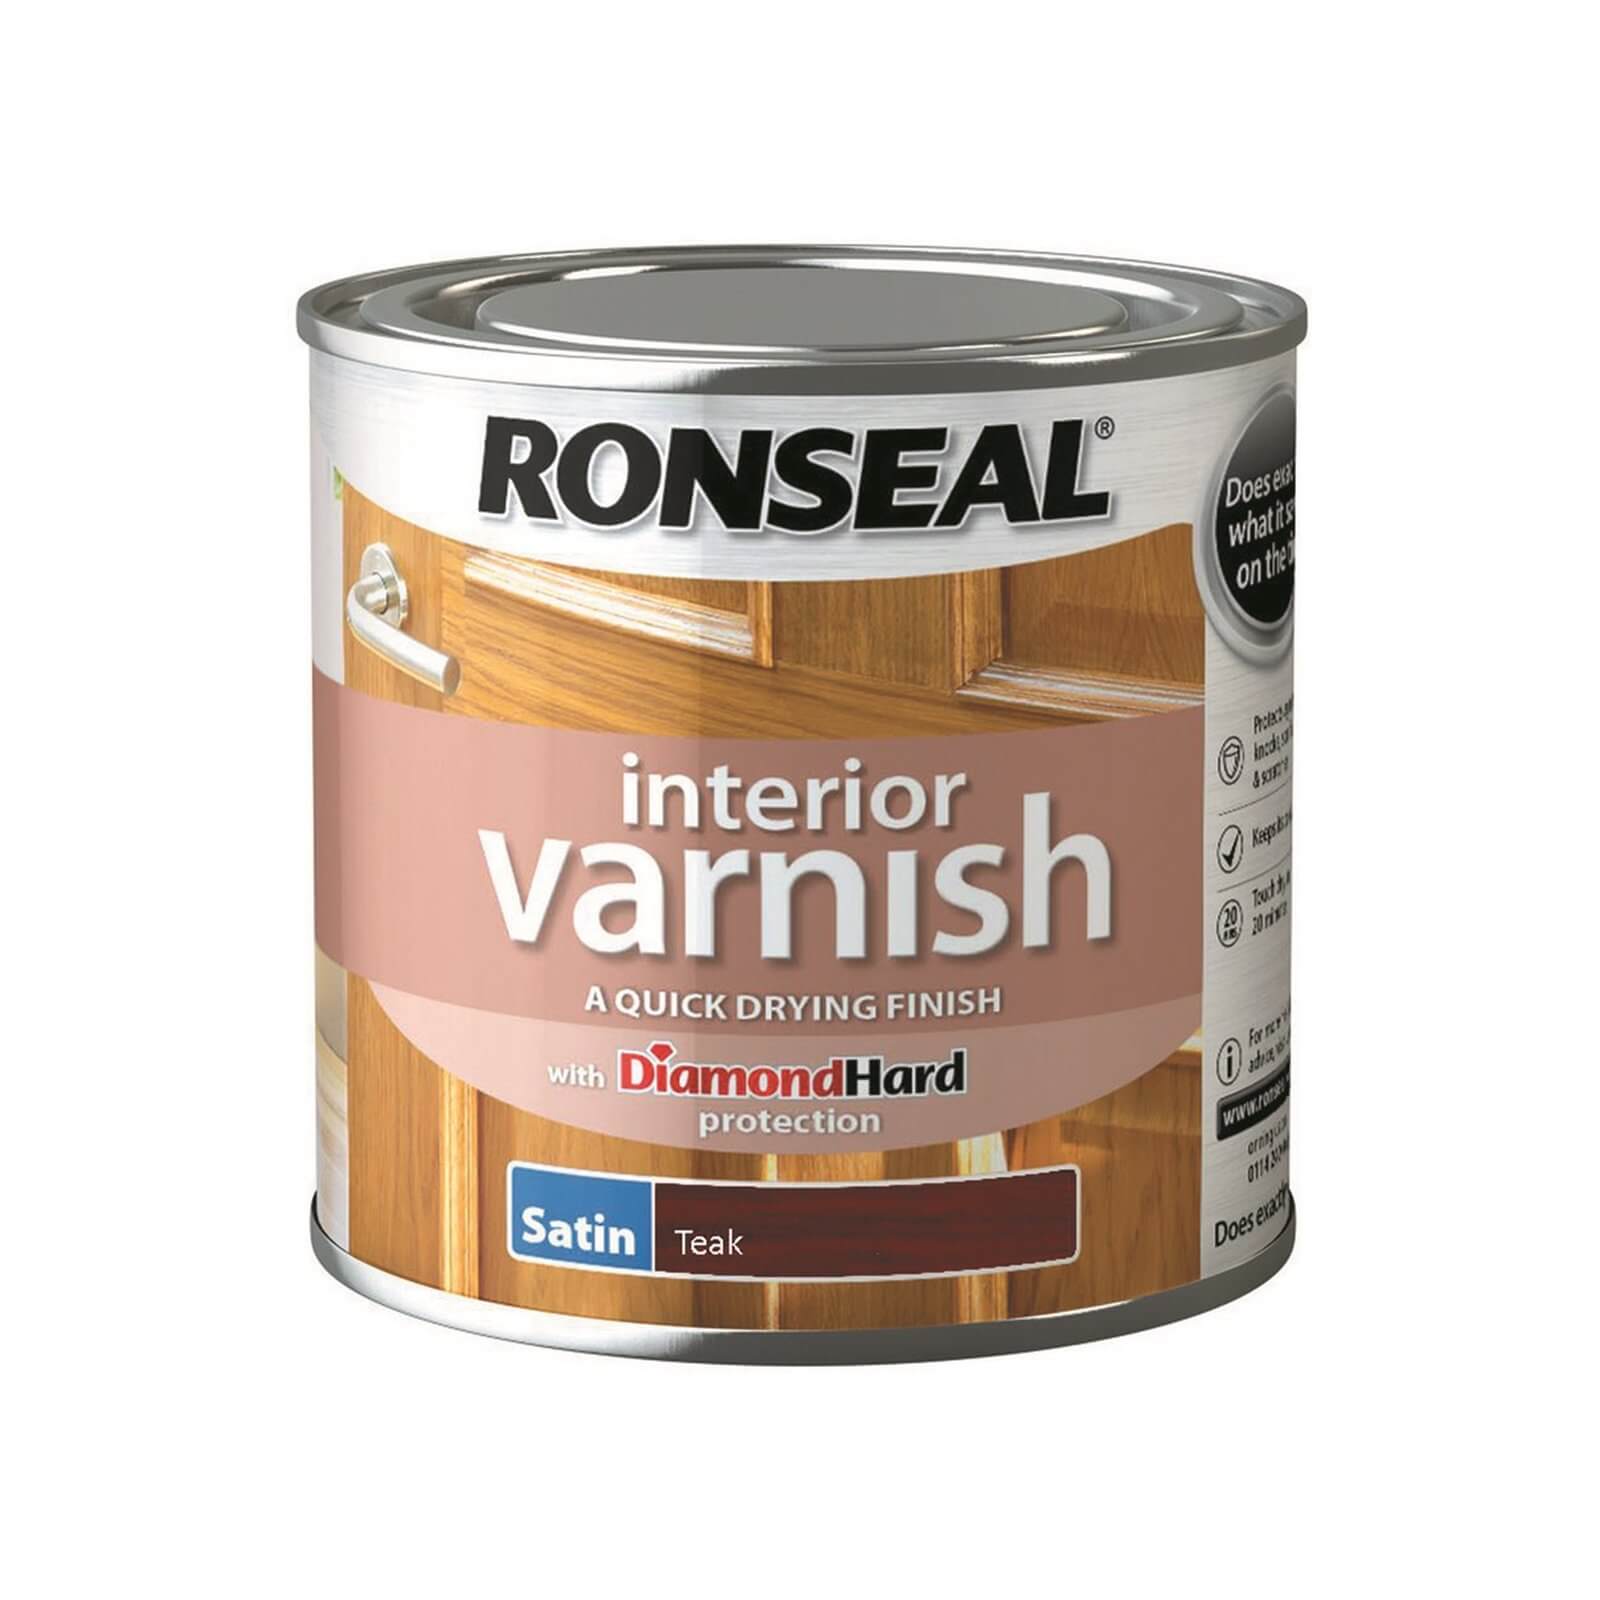 Ronseal Interior Varnish Satin Teak - 250ml